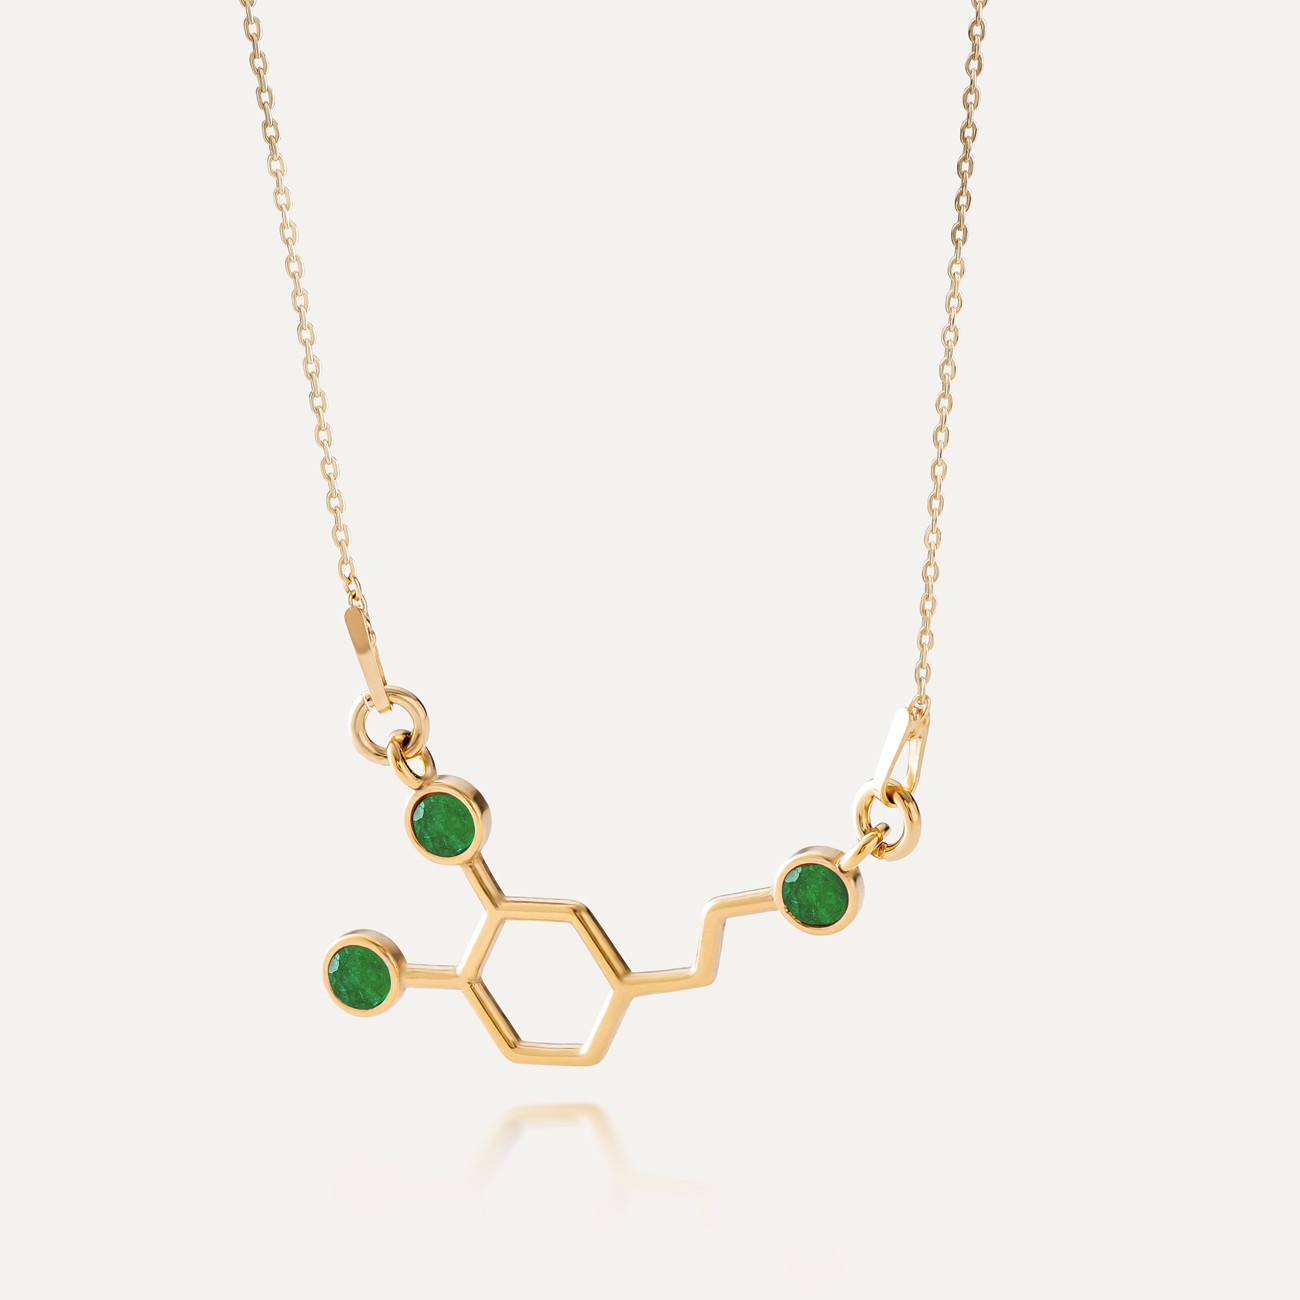 Dopamine necklace colorful stones